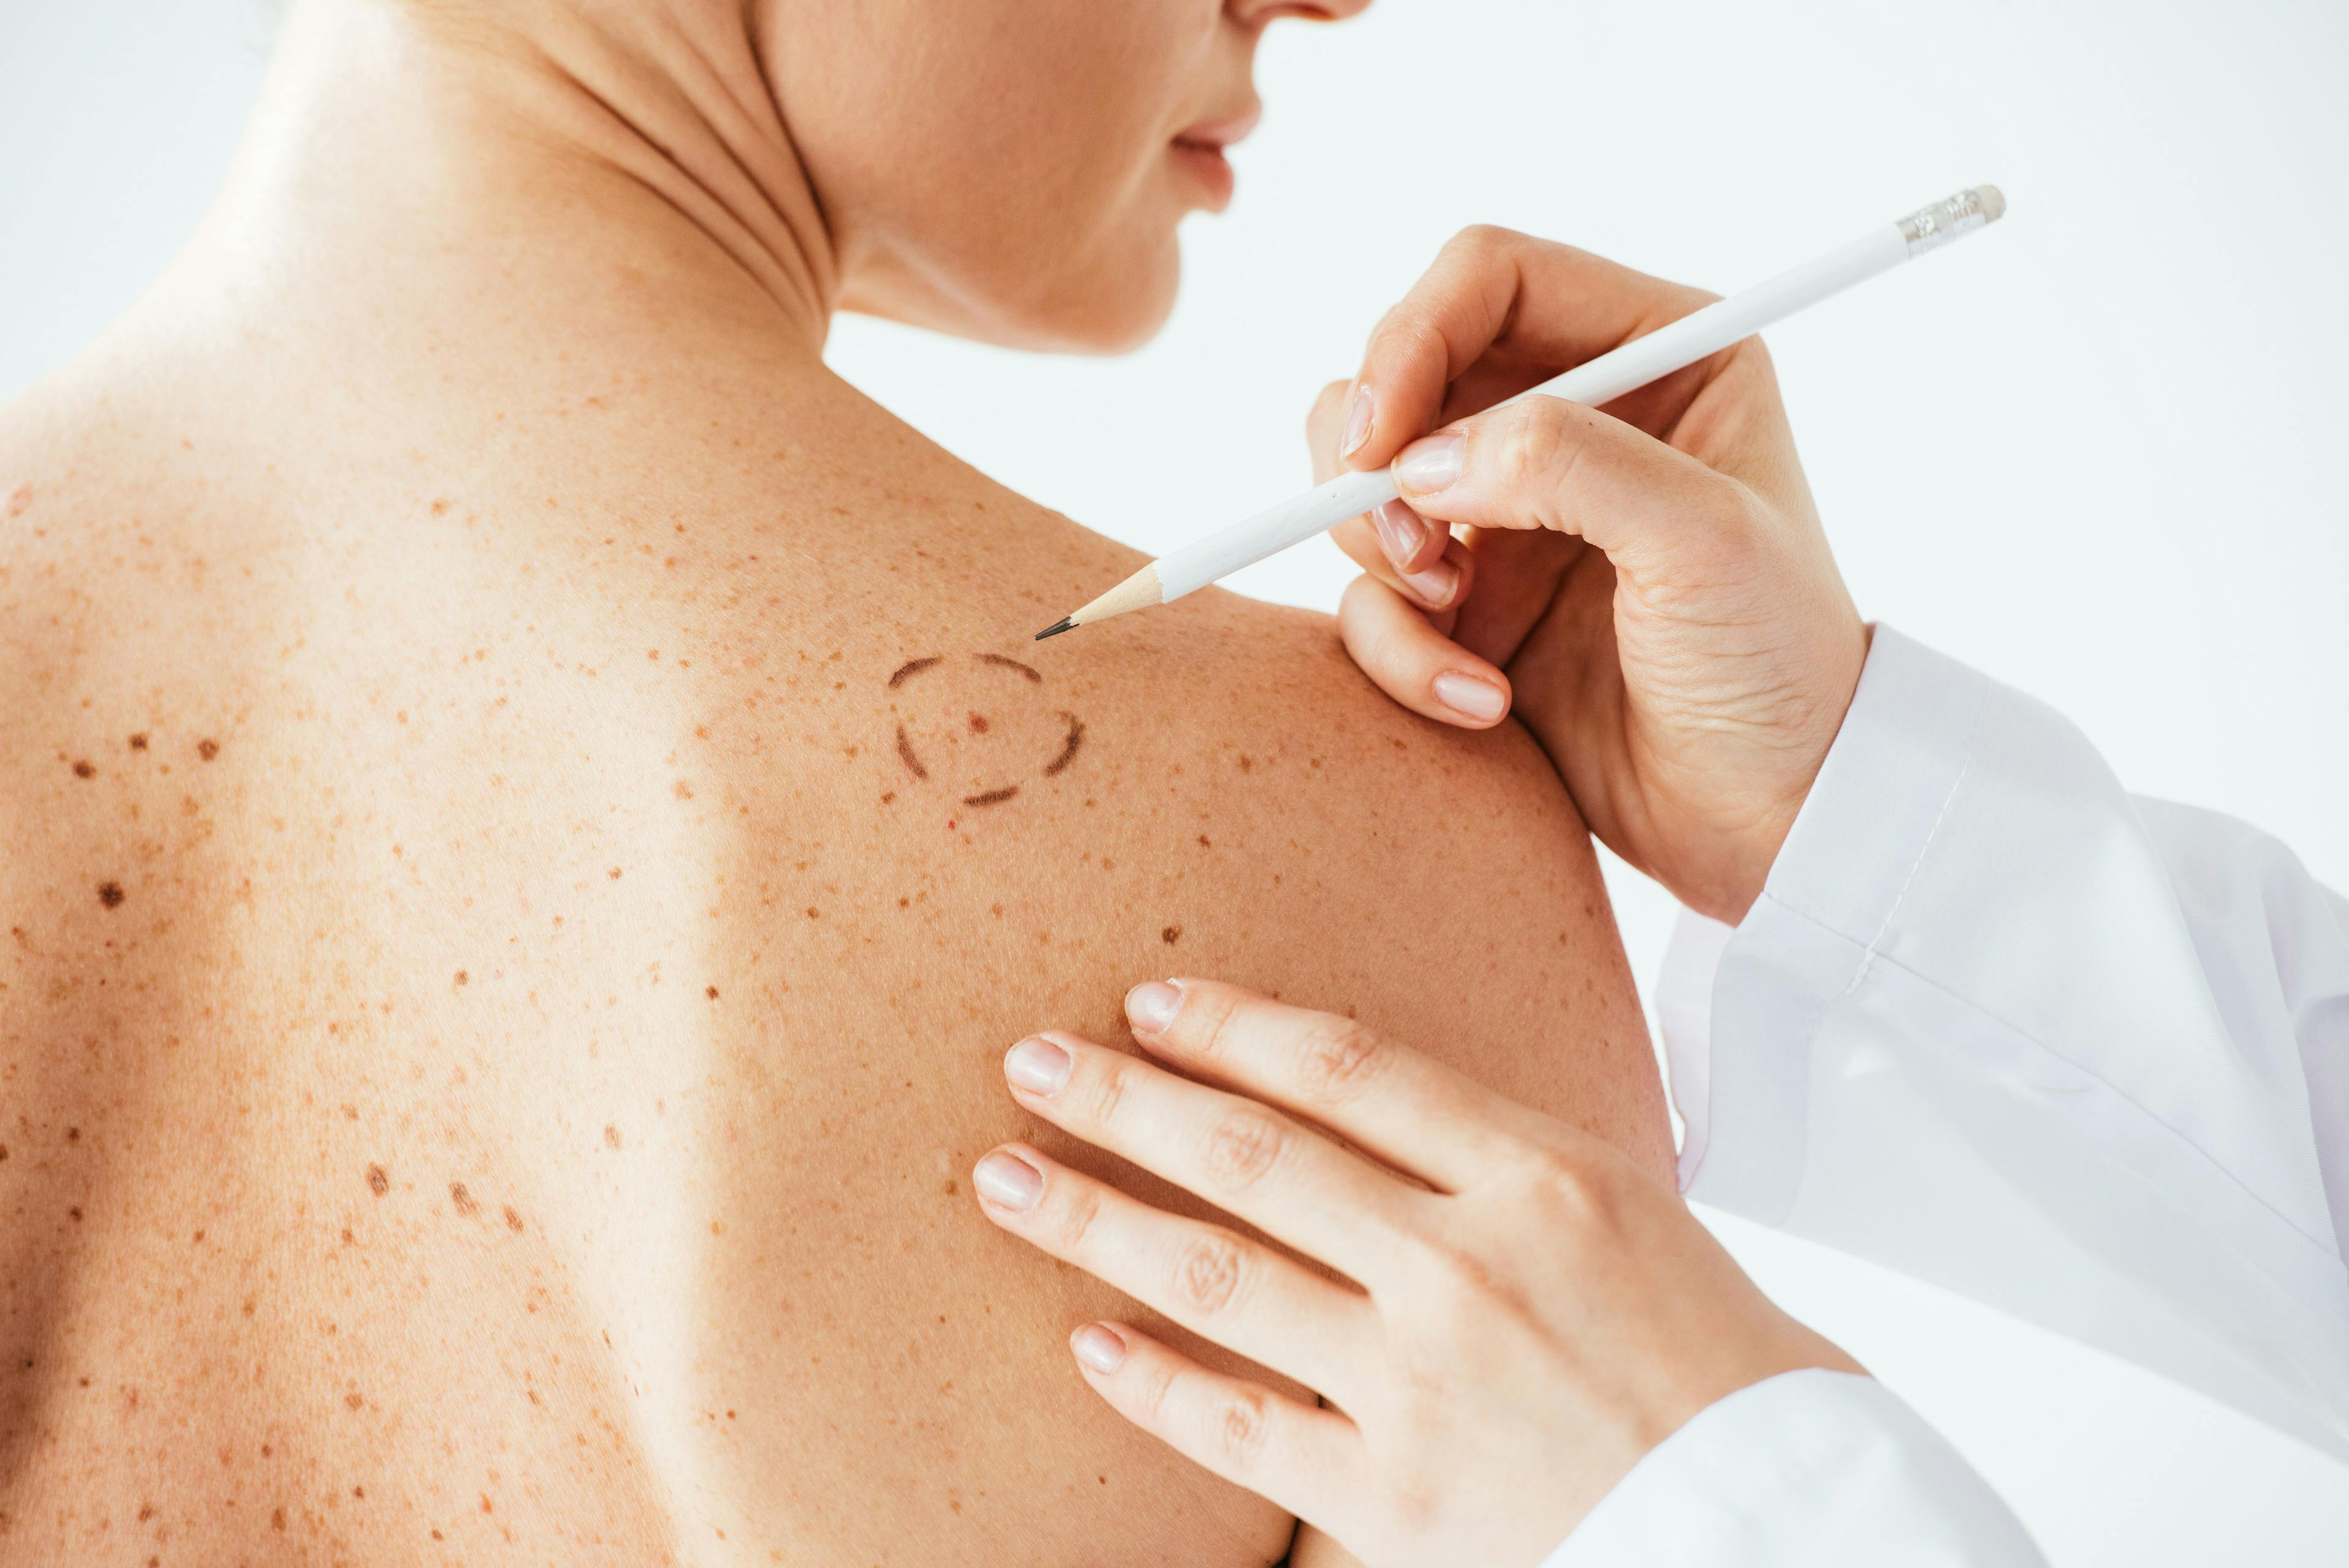 dermatology exam | Image credit: LIGHTFIELD STUDIOS - stock.adobe.com